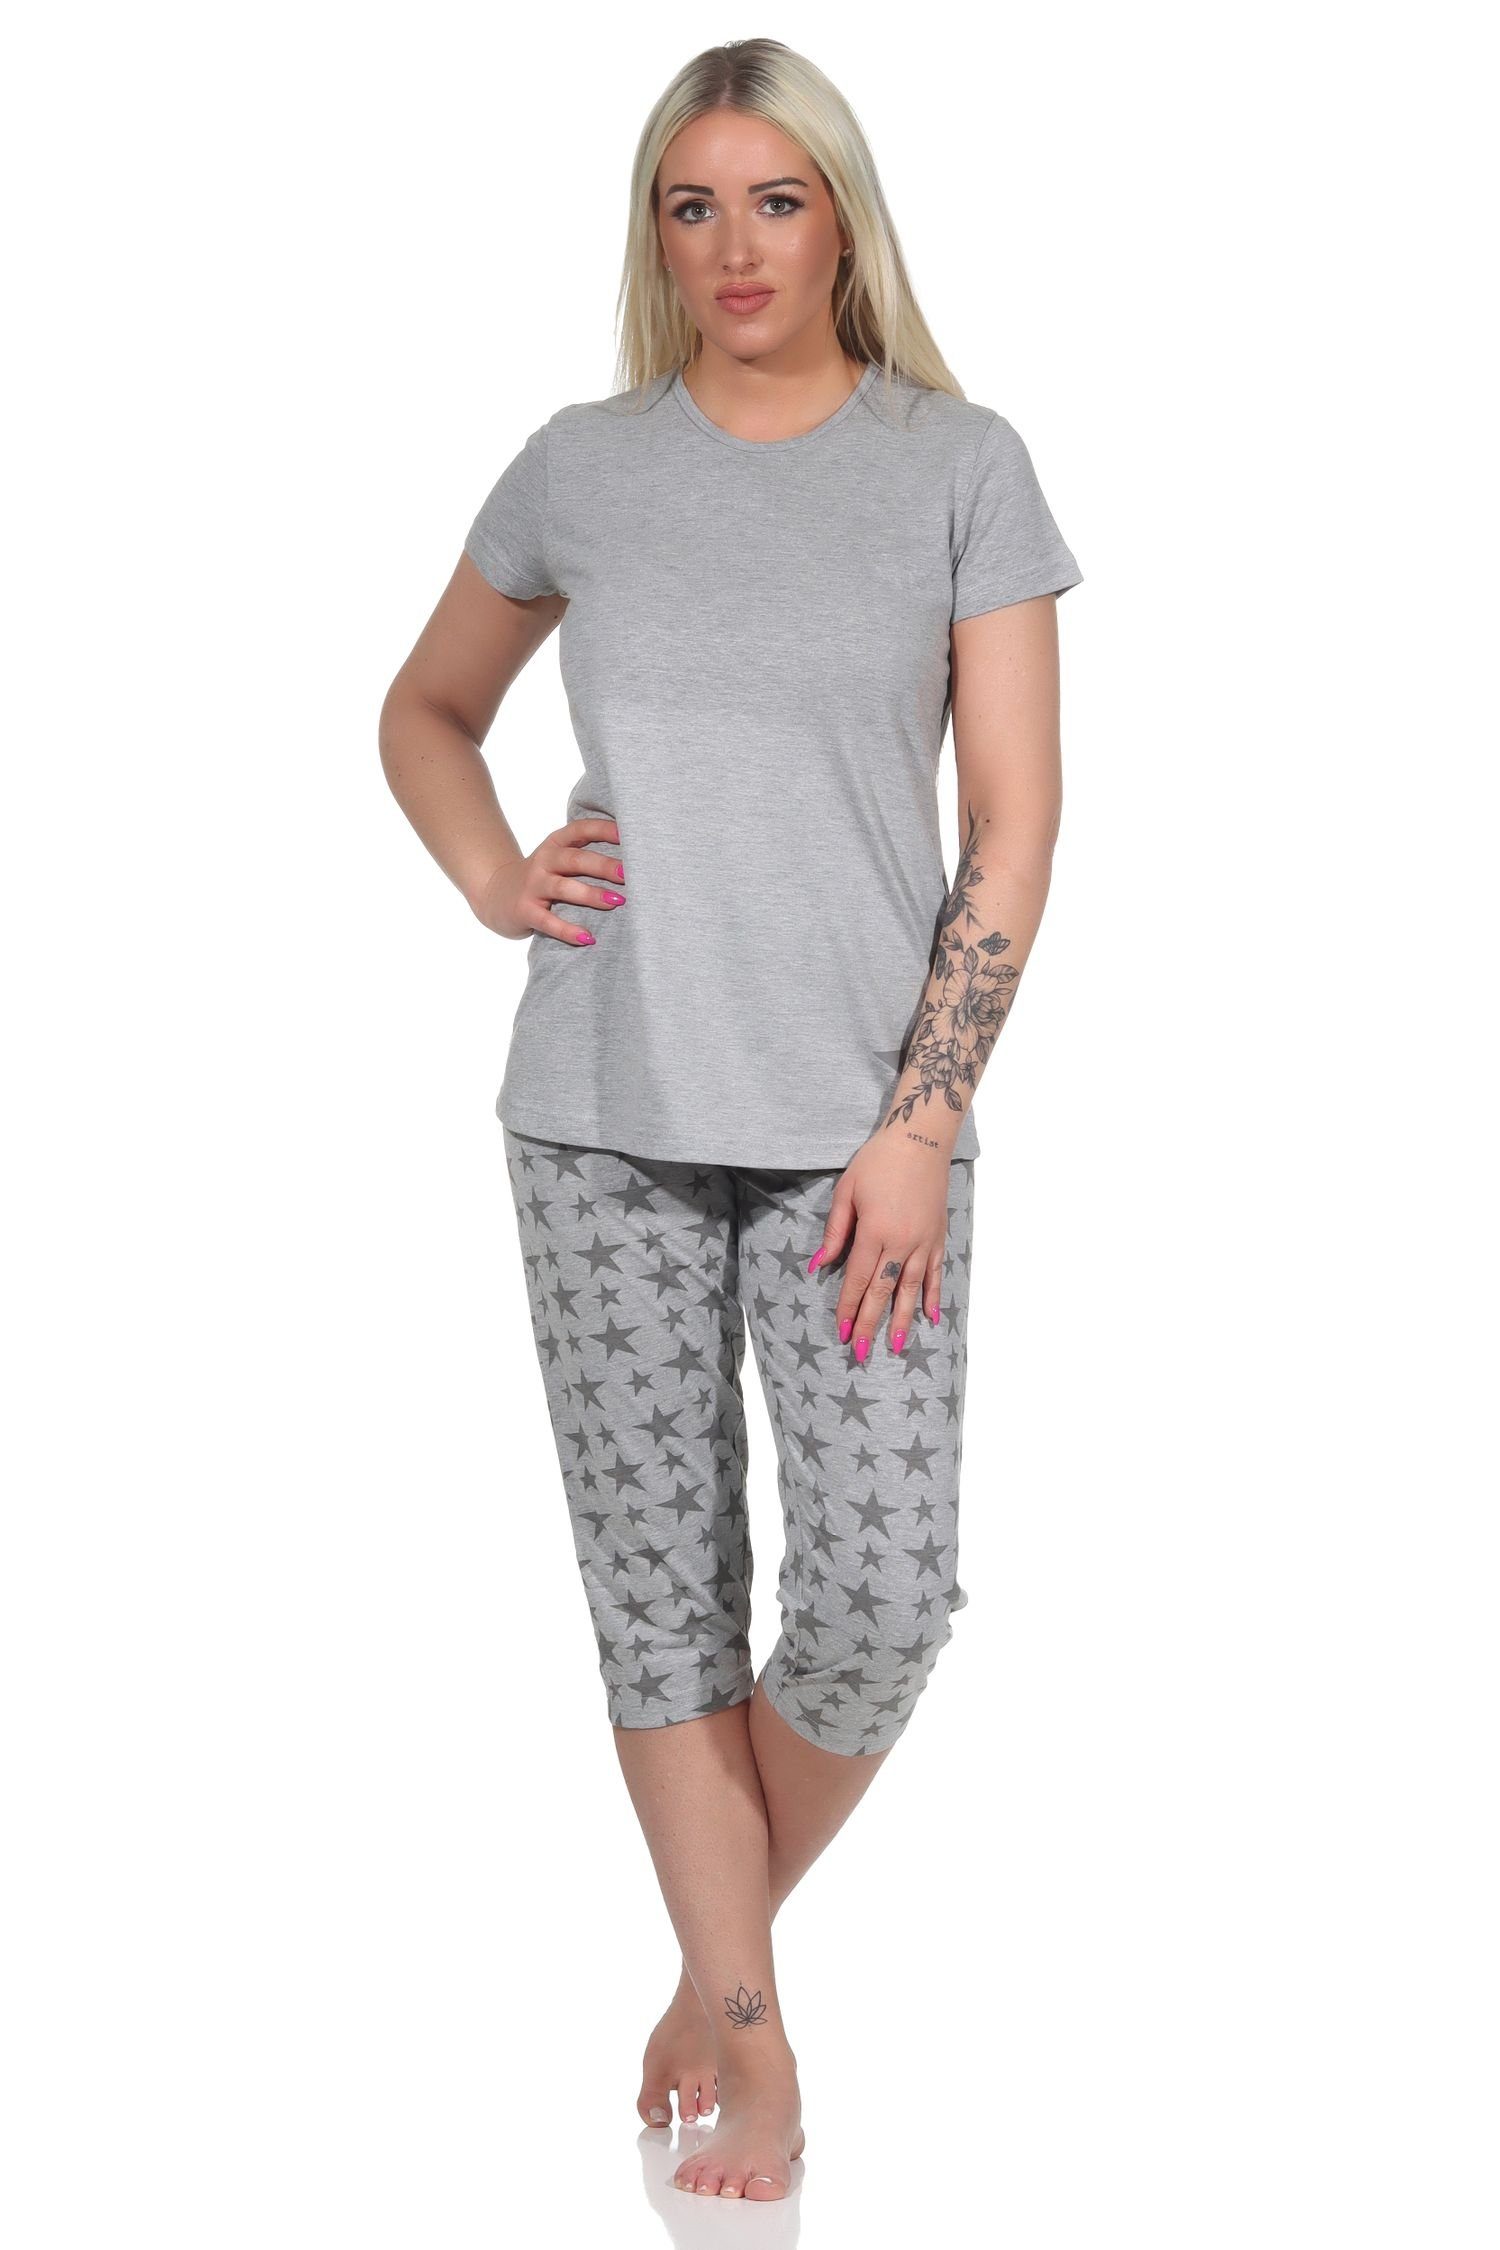 Normann Pyjama Damen Capri Pyjama, Schlafanzug mit Sternen - 112 204 10 735 grau